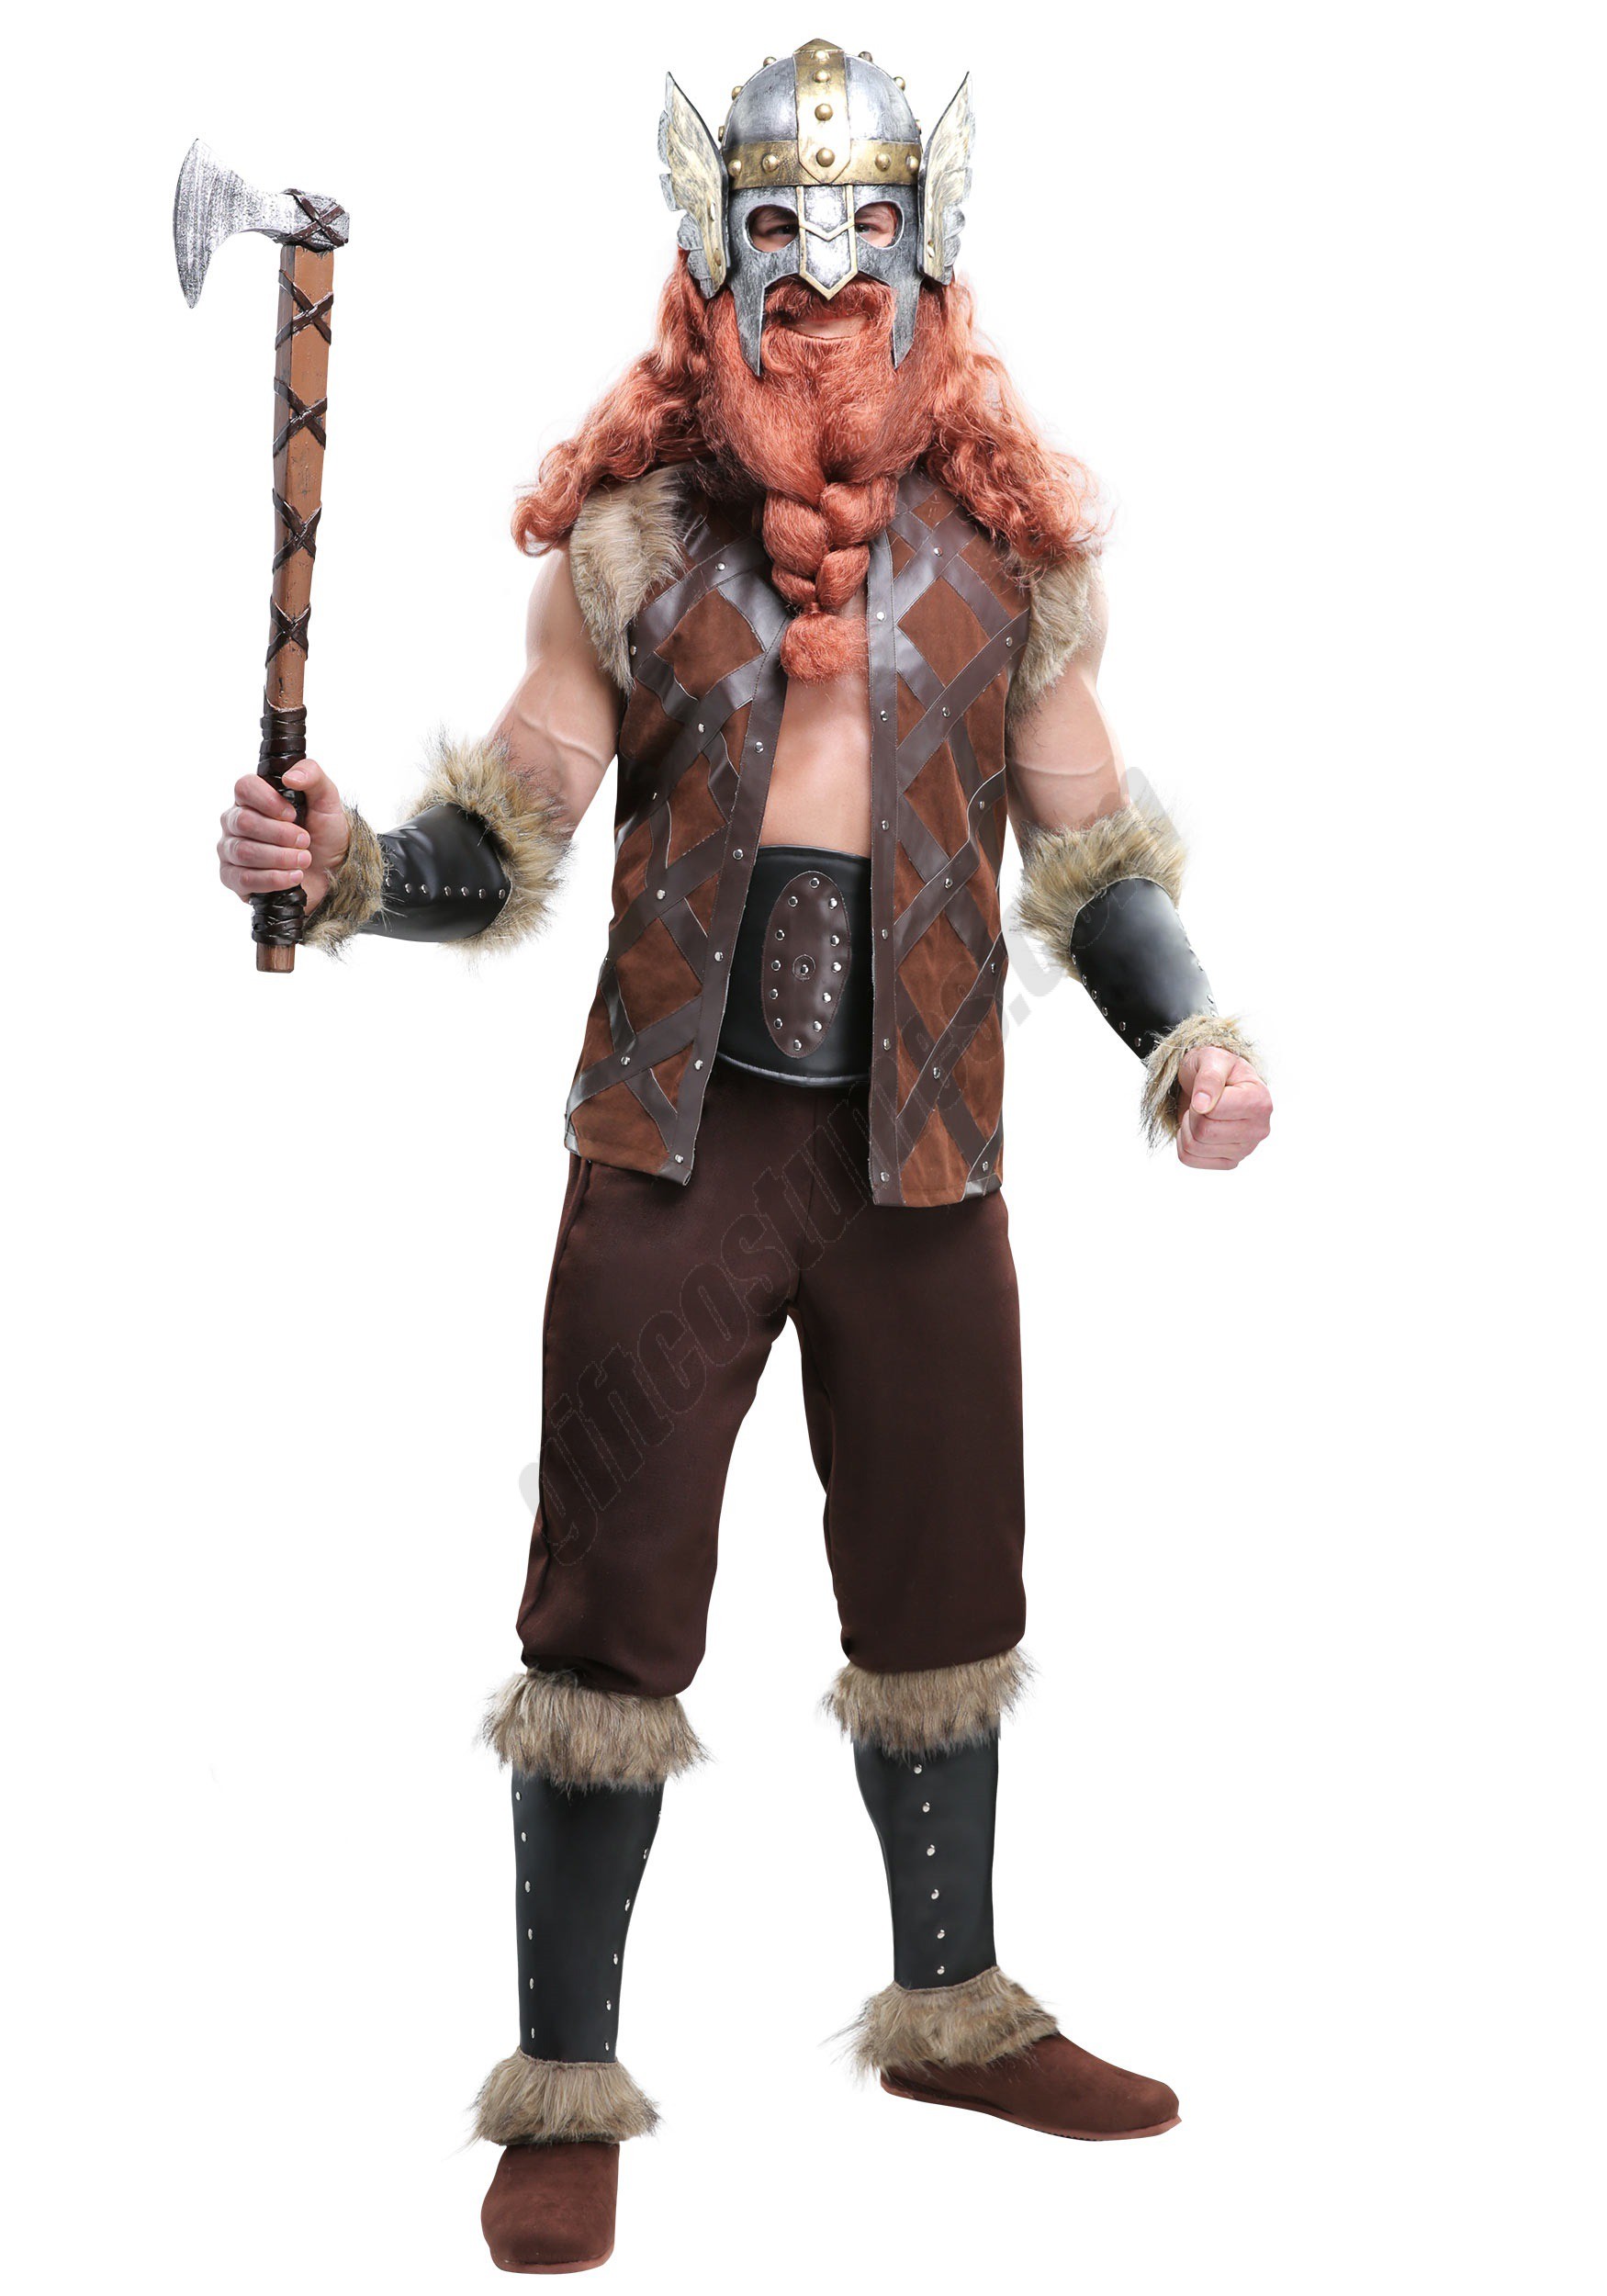 Viking Barbarian Men's Costume Promotions - Viking Barbarian Men's Costume Promotions